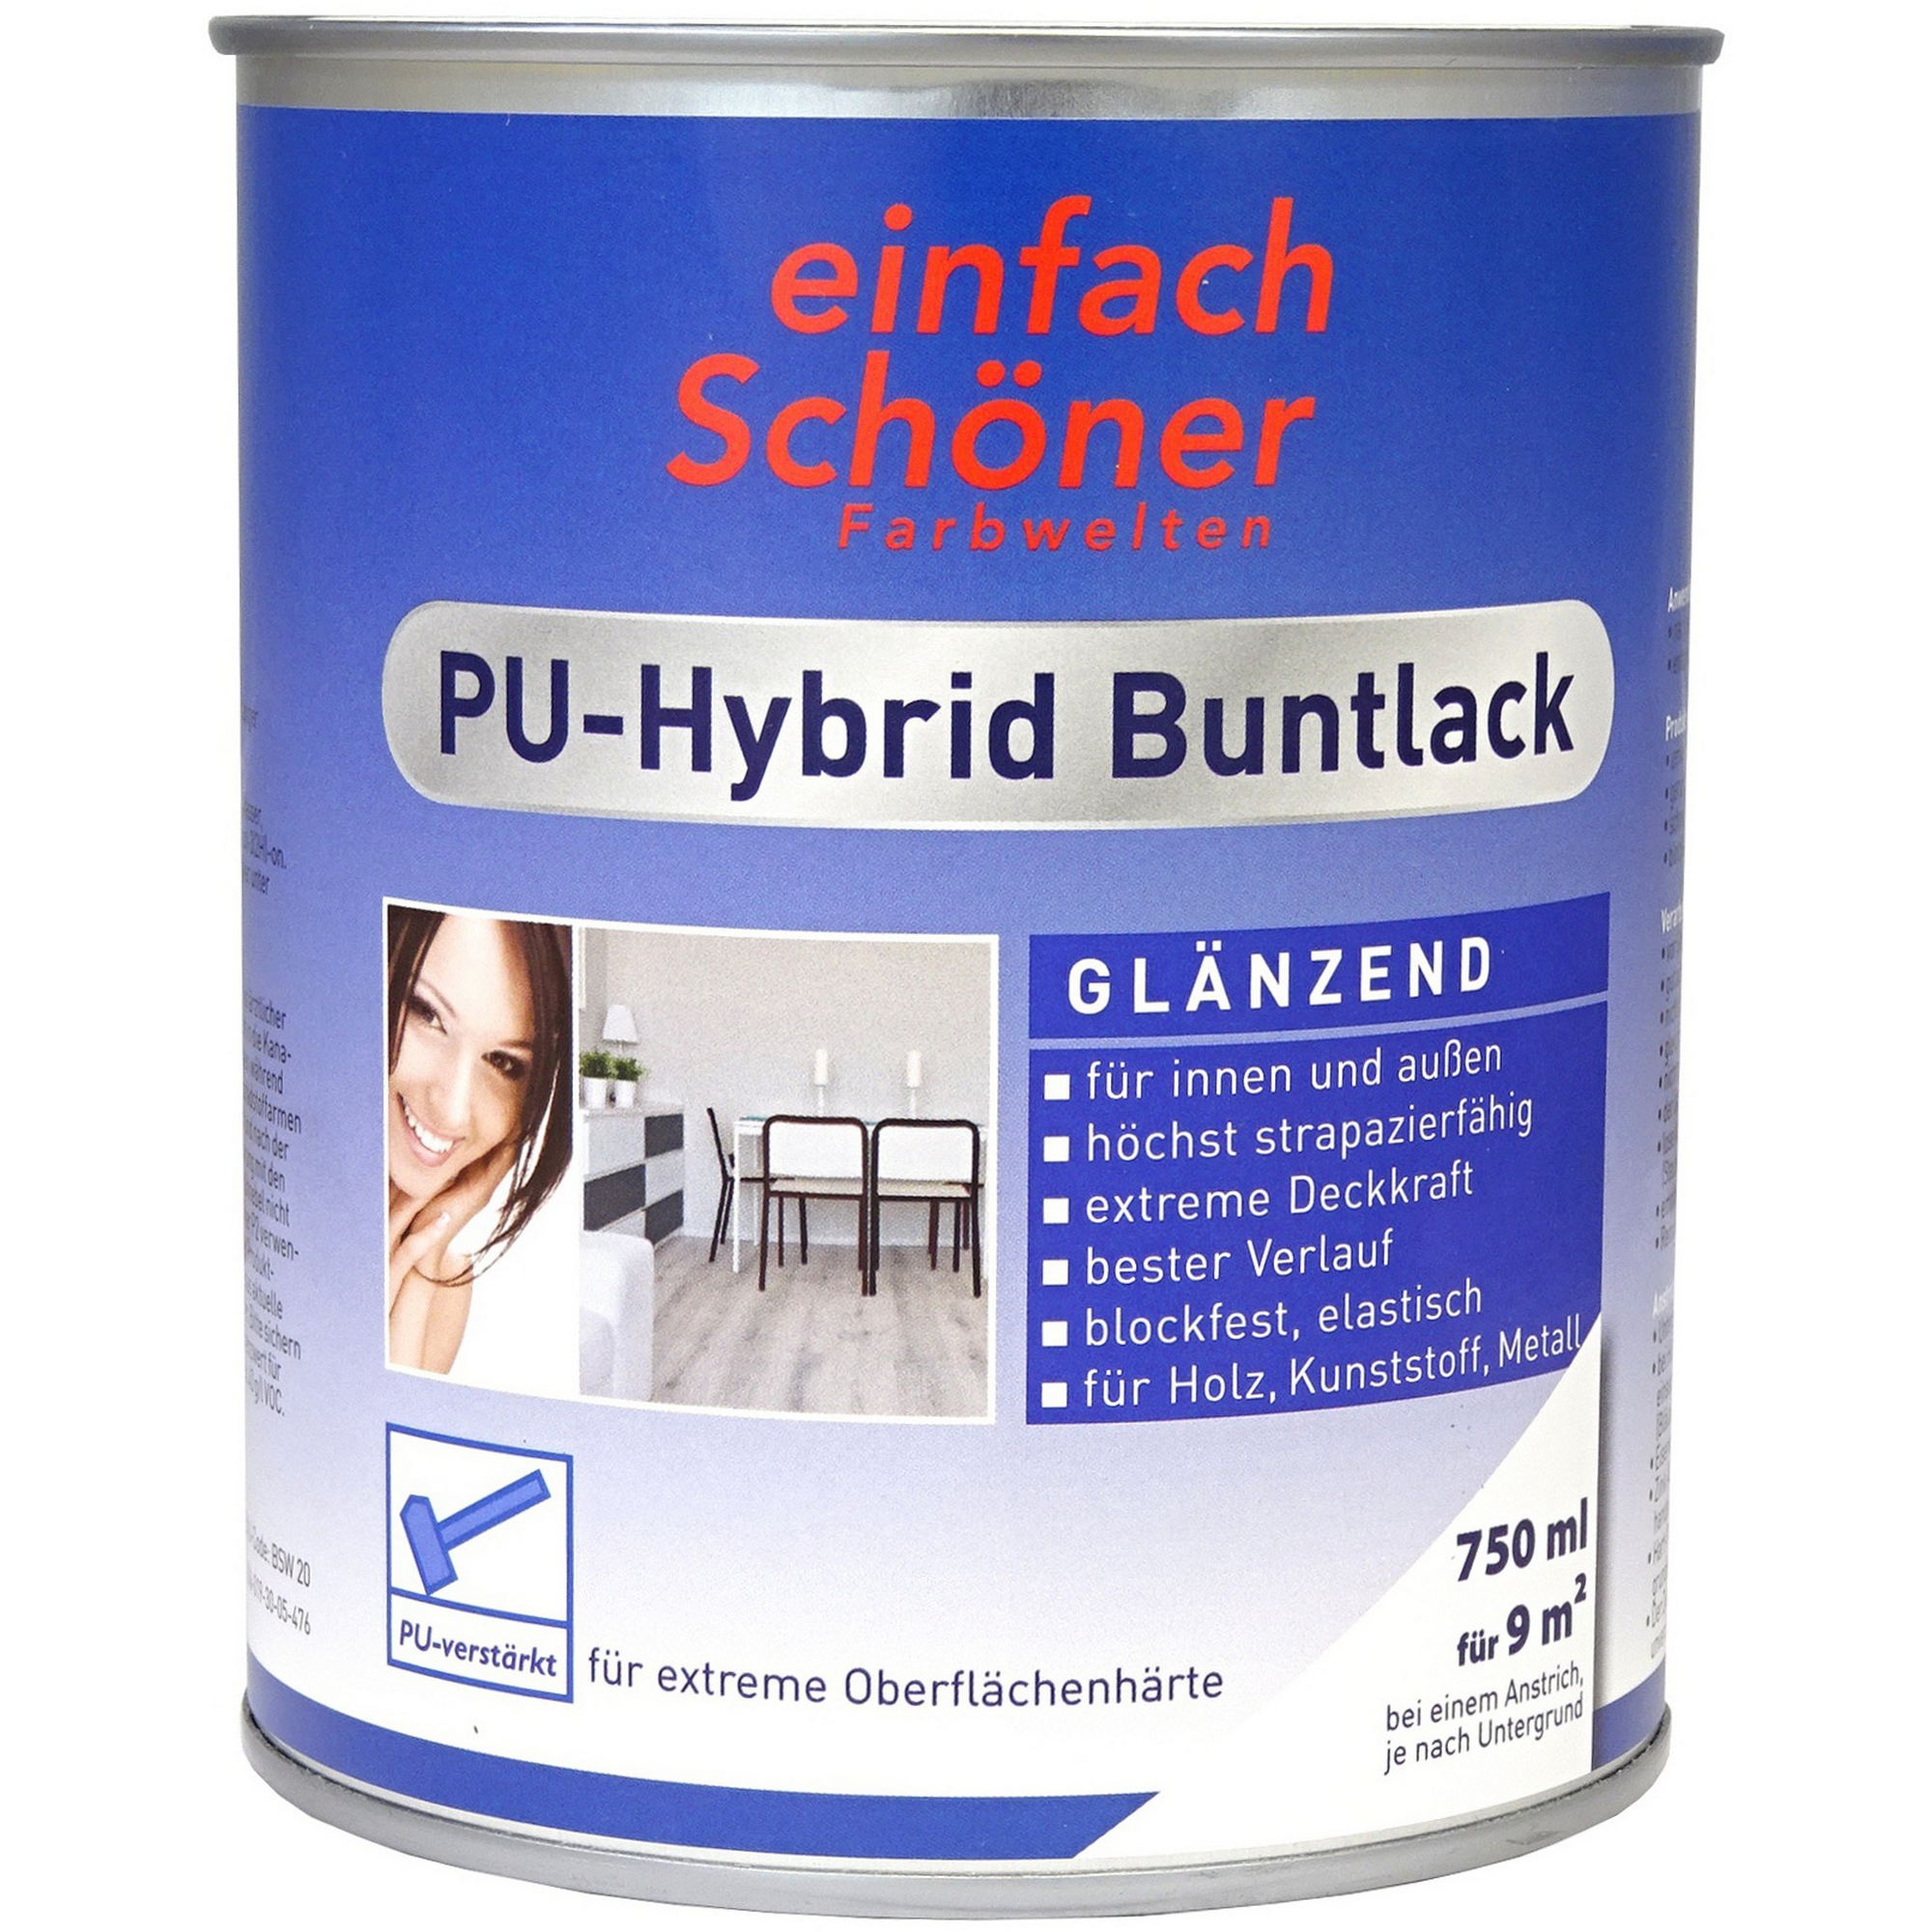 PU-Hybrid Buntlack schokobraun glänzend 750 ml + product picture